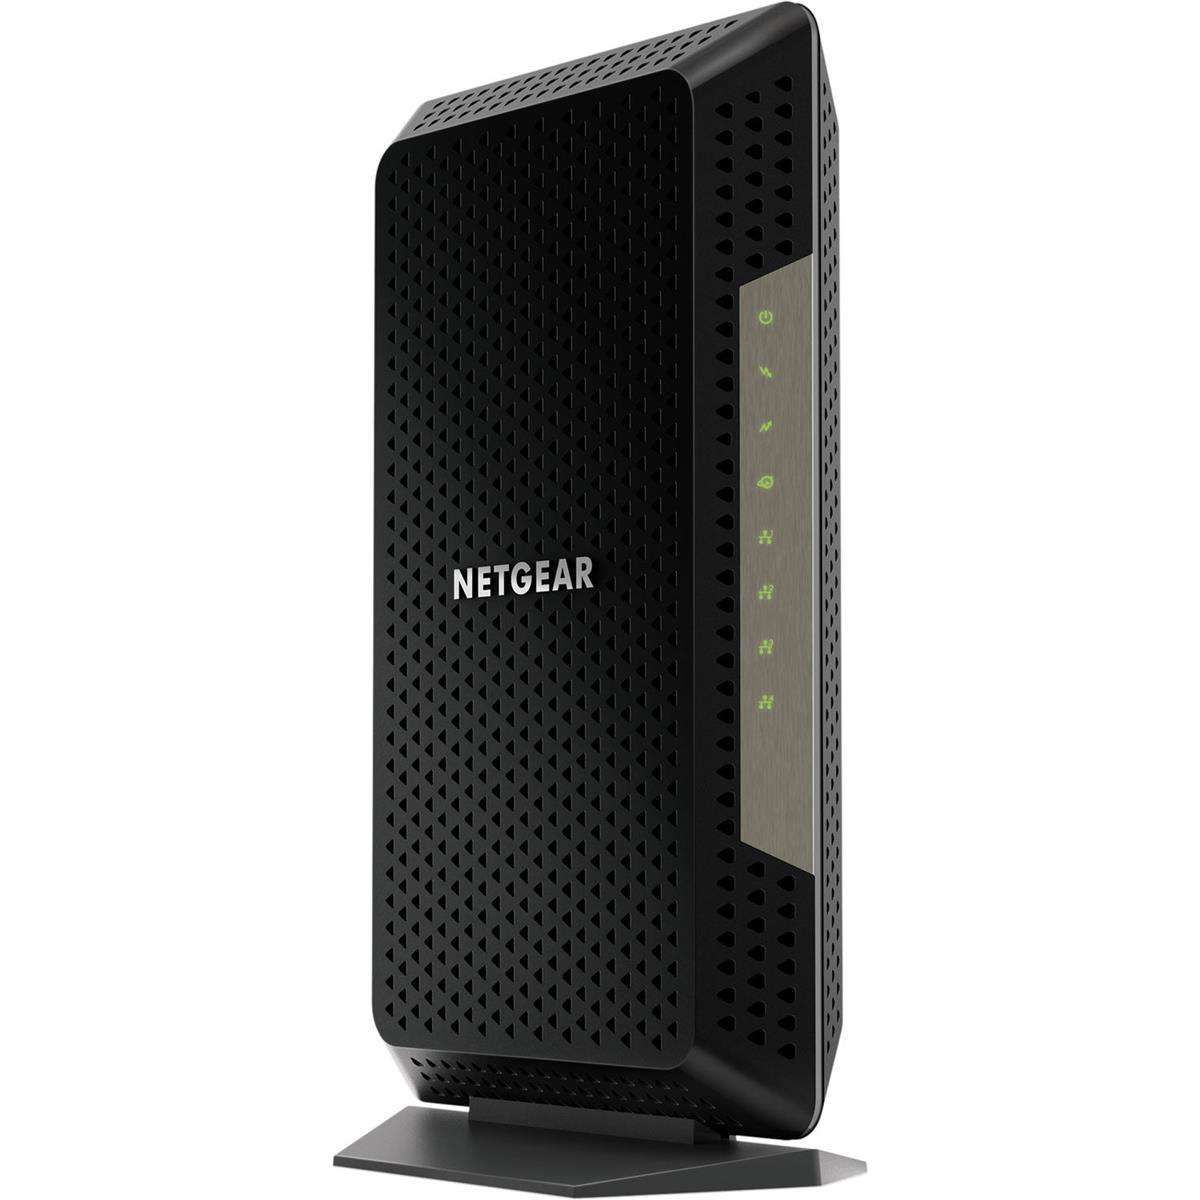 Image of Netgear Nighthawk Multi-Gig Speed Cable Modem